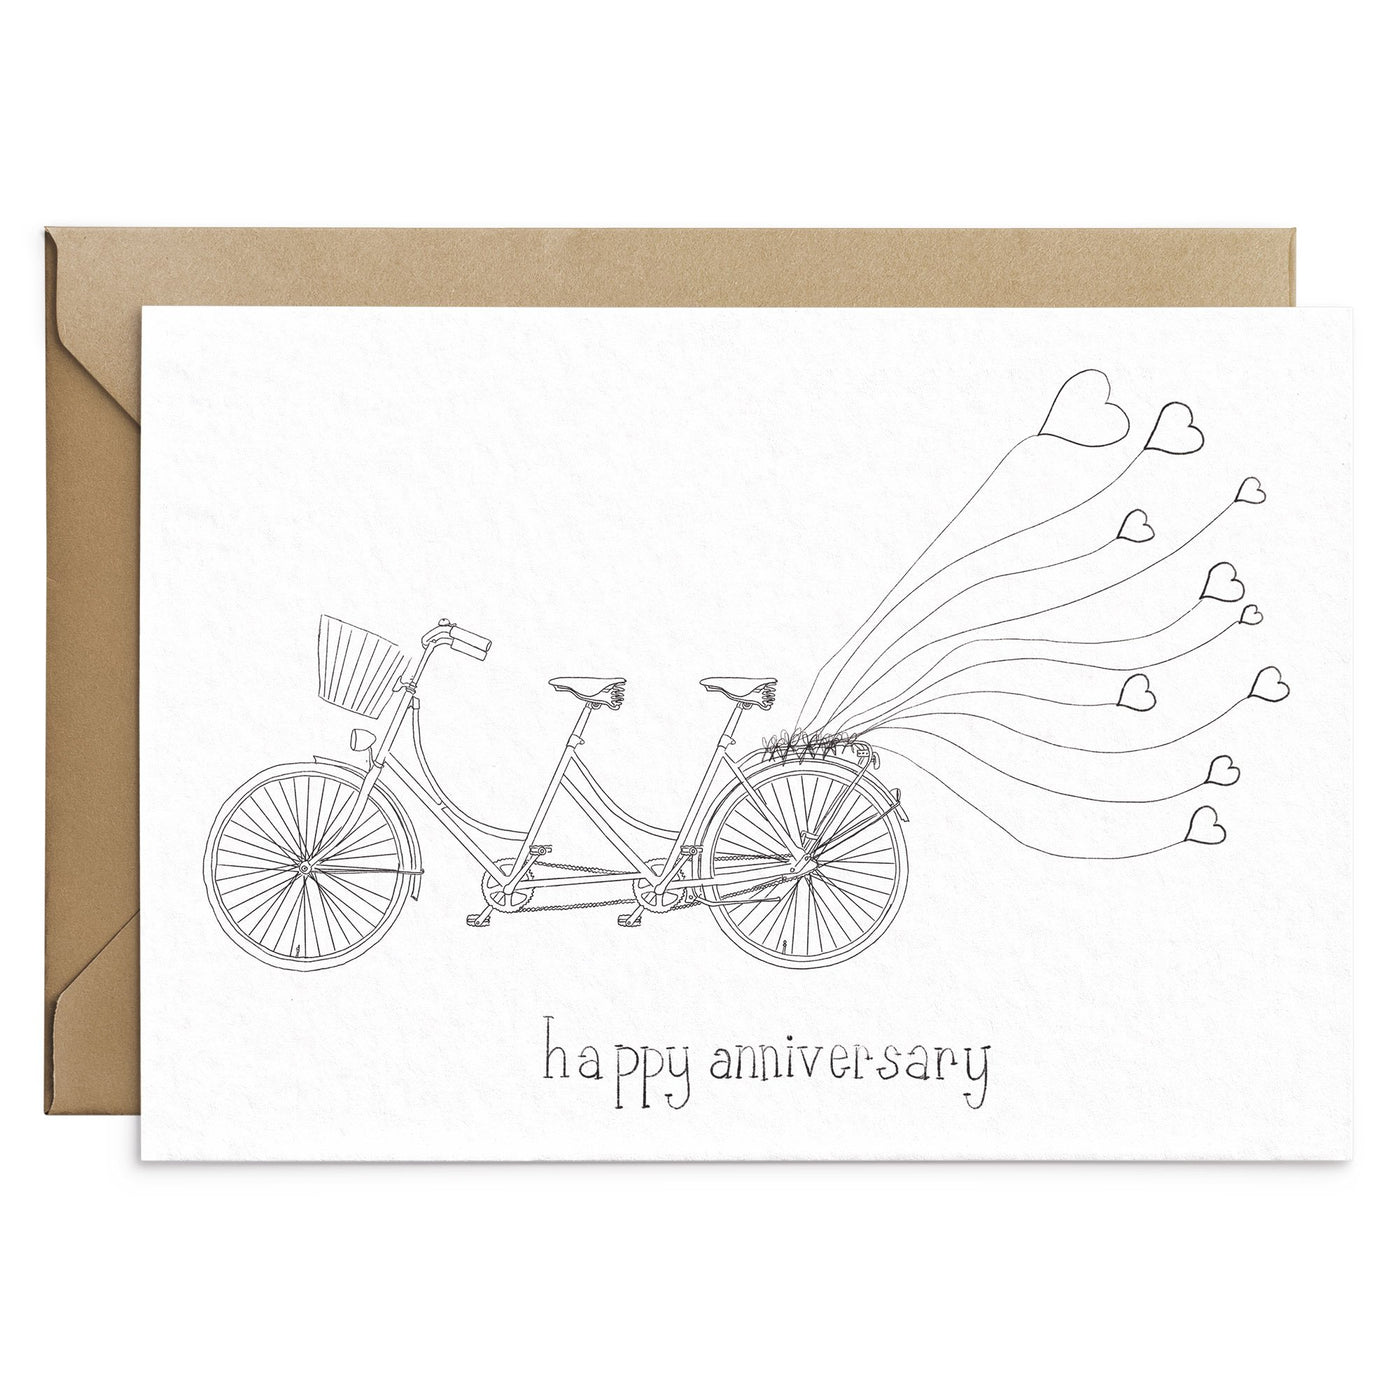 Tandem Anniversary Card - Poppins & Co.